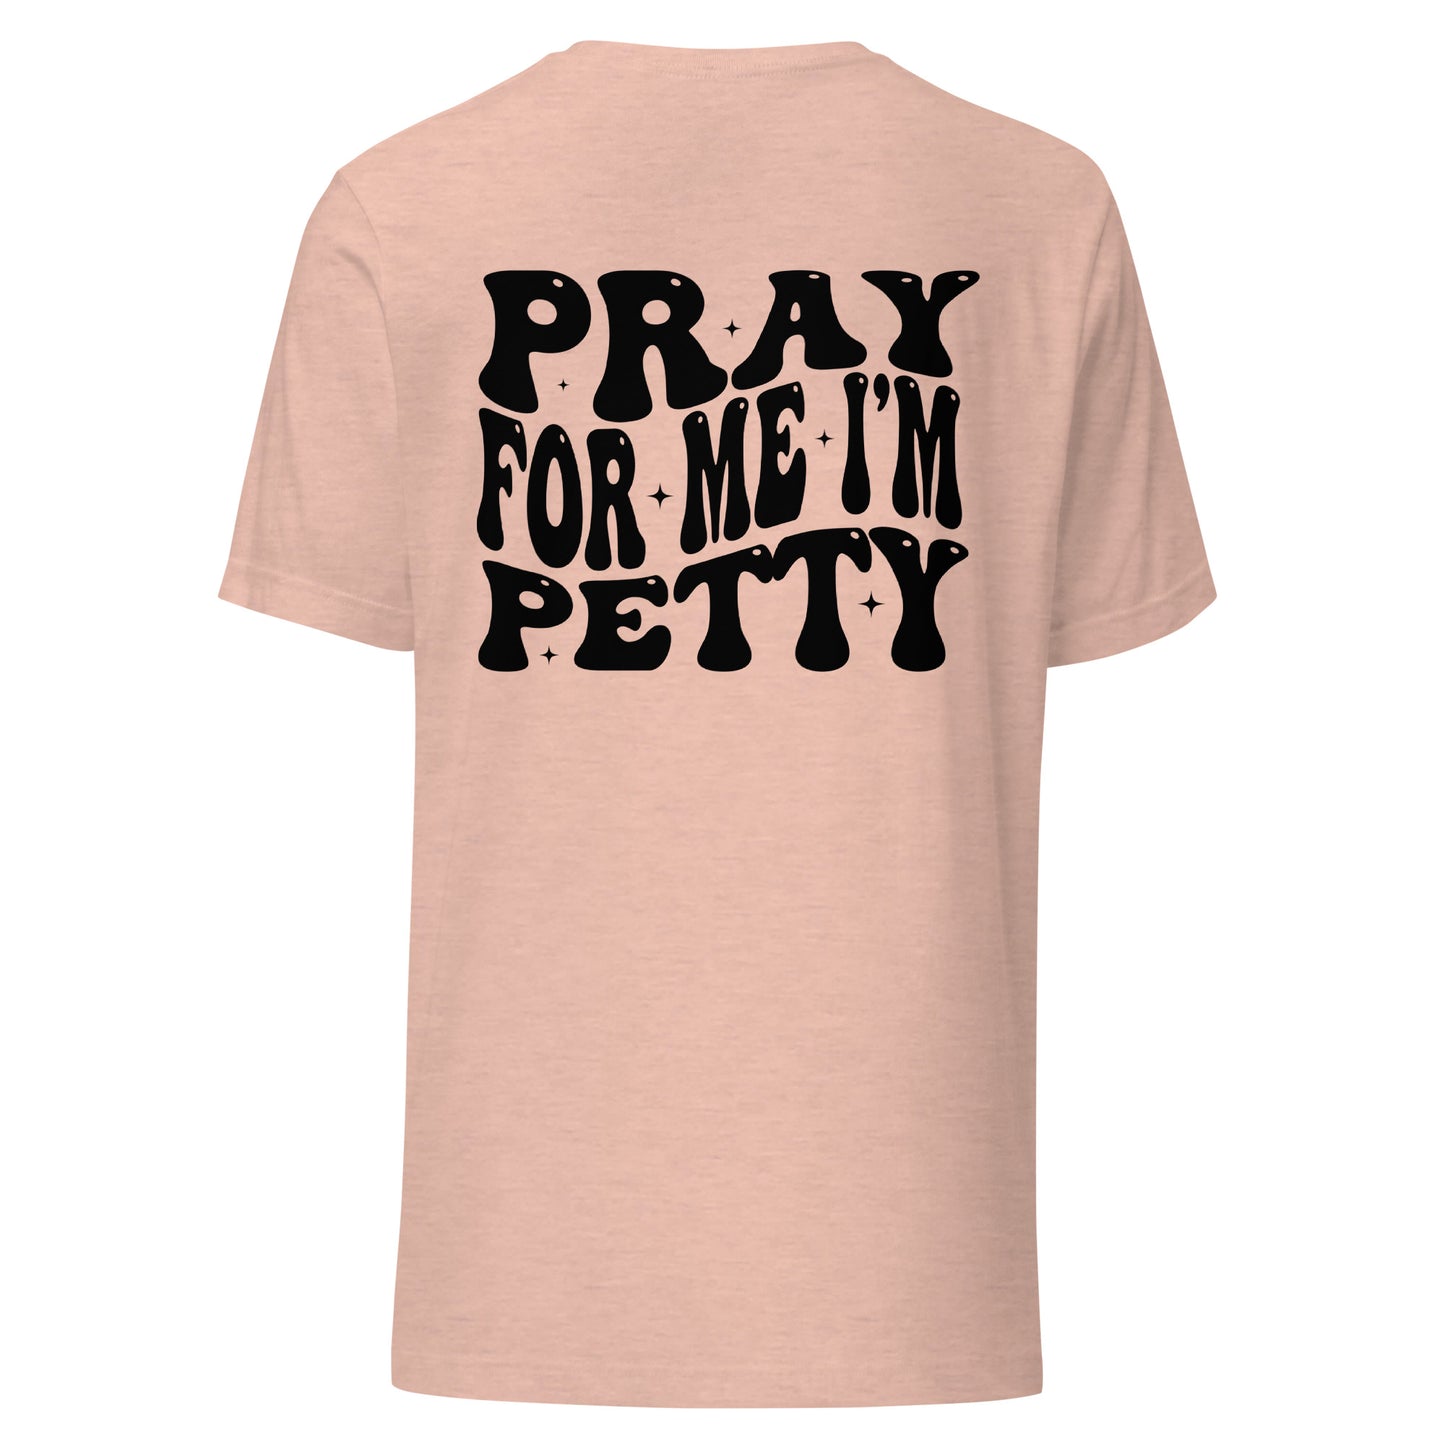 Pray for me t-shirt